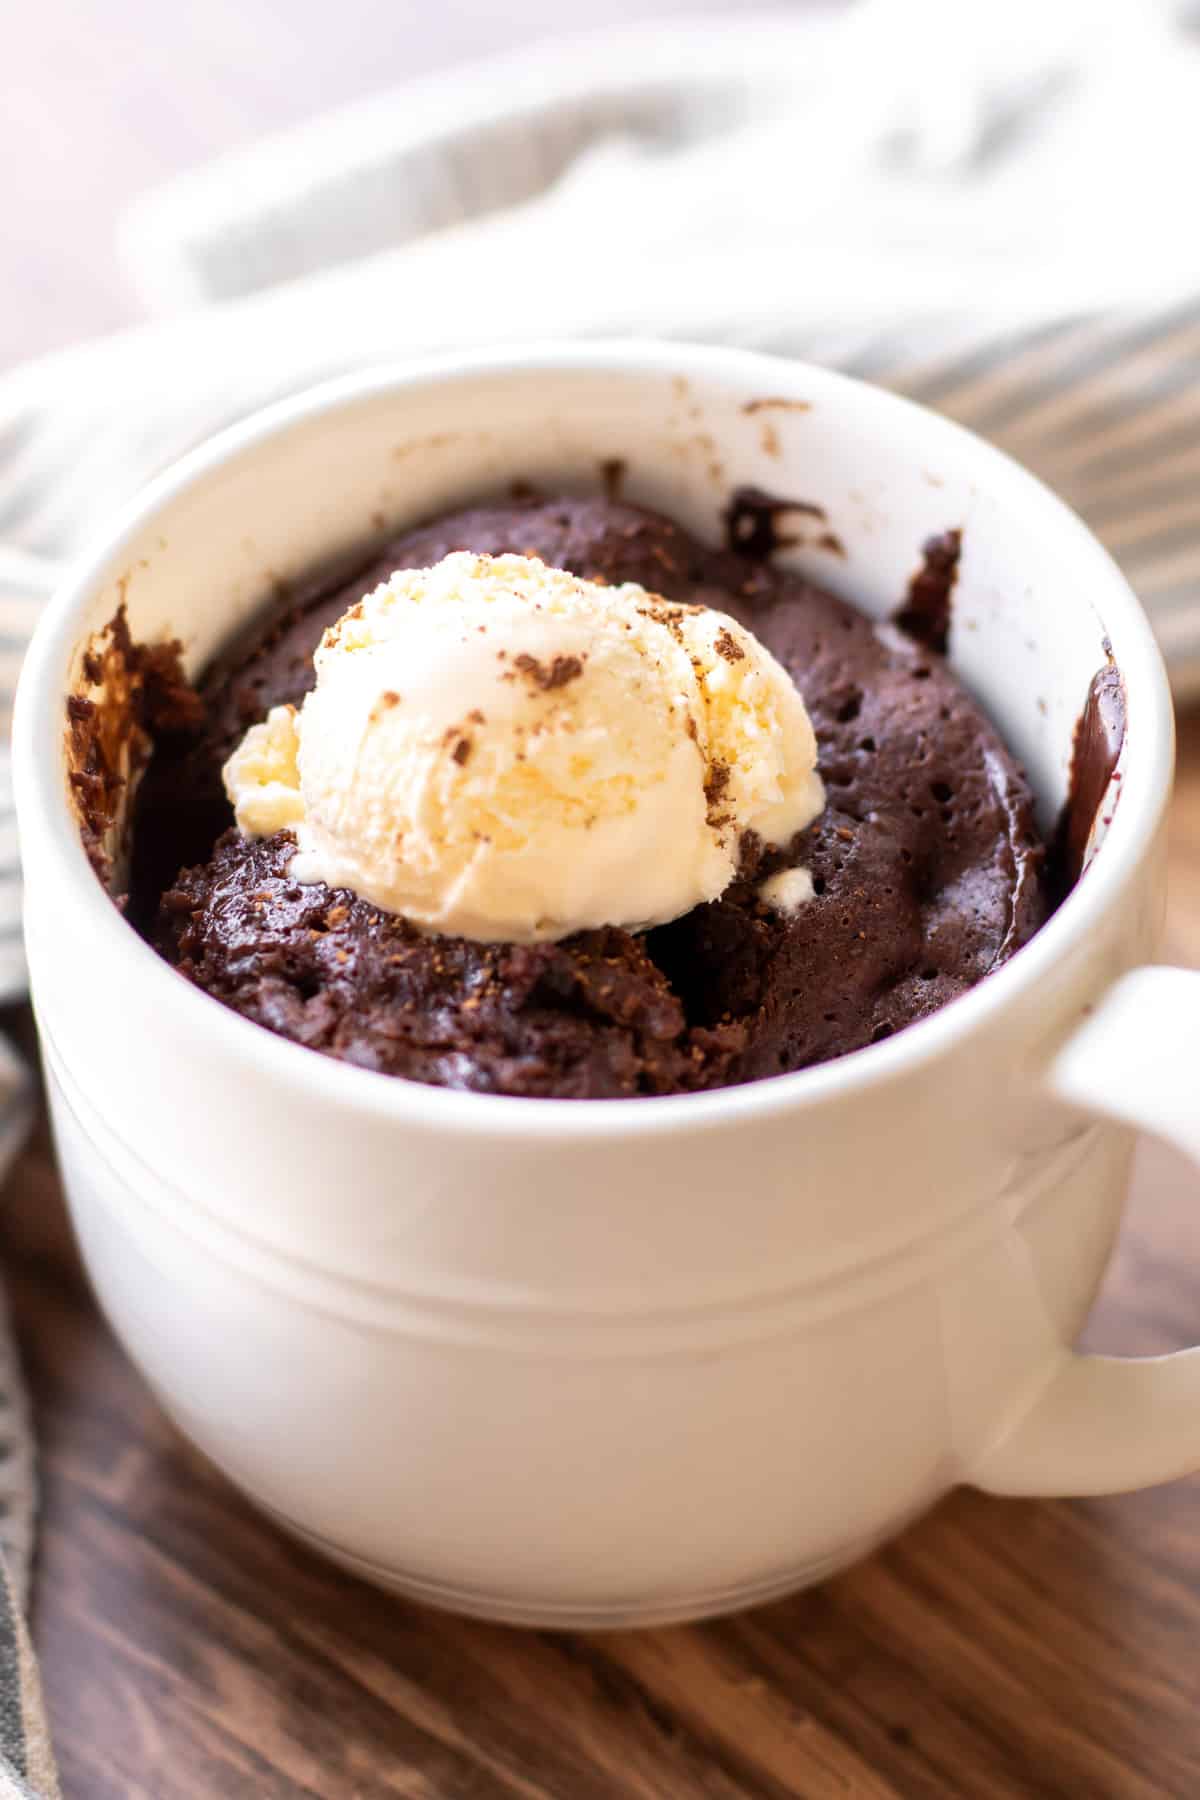 a chocolate mug cake with a scoop of vanilla ice cream.